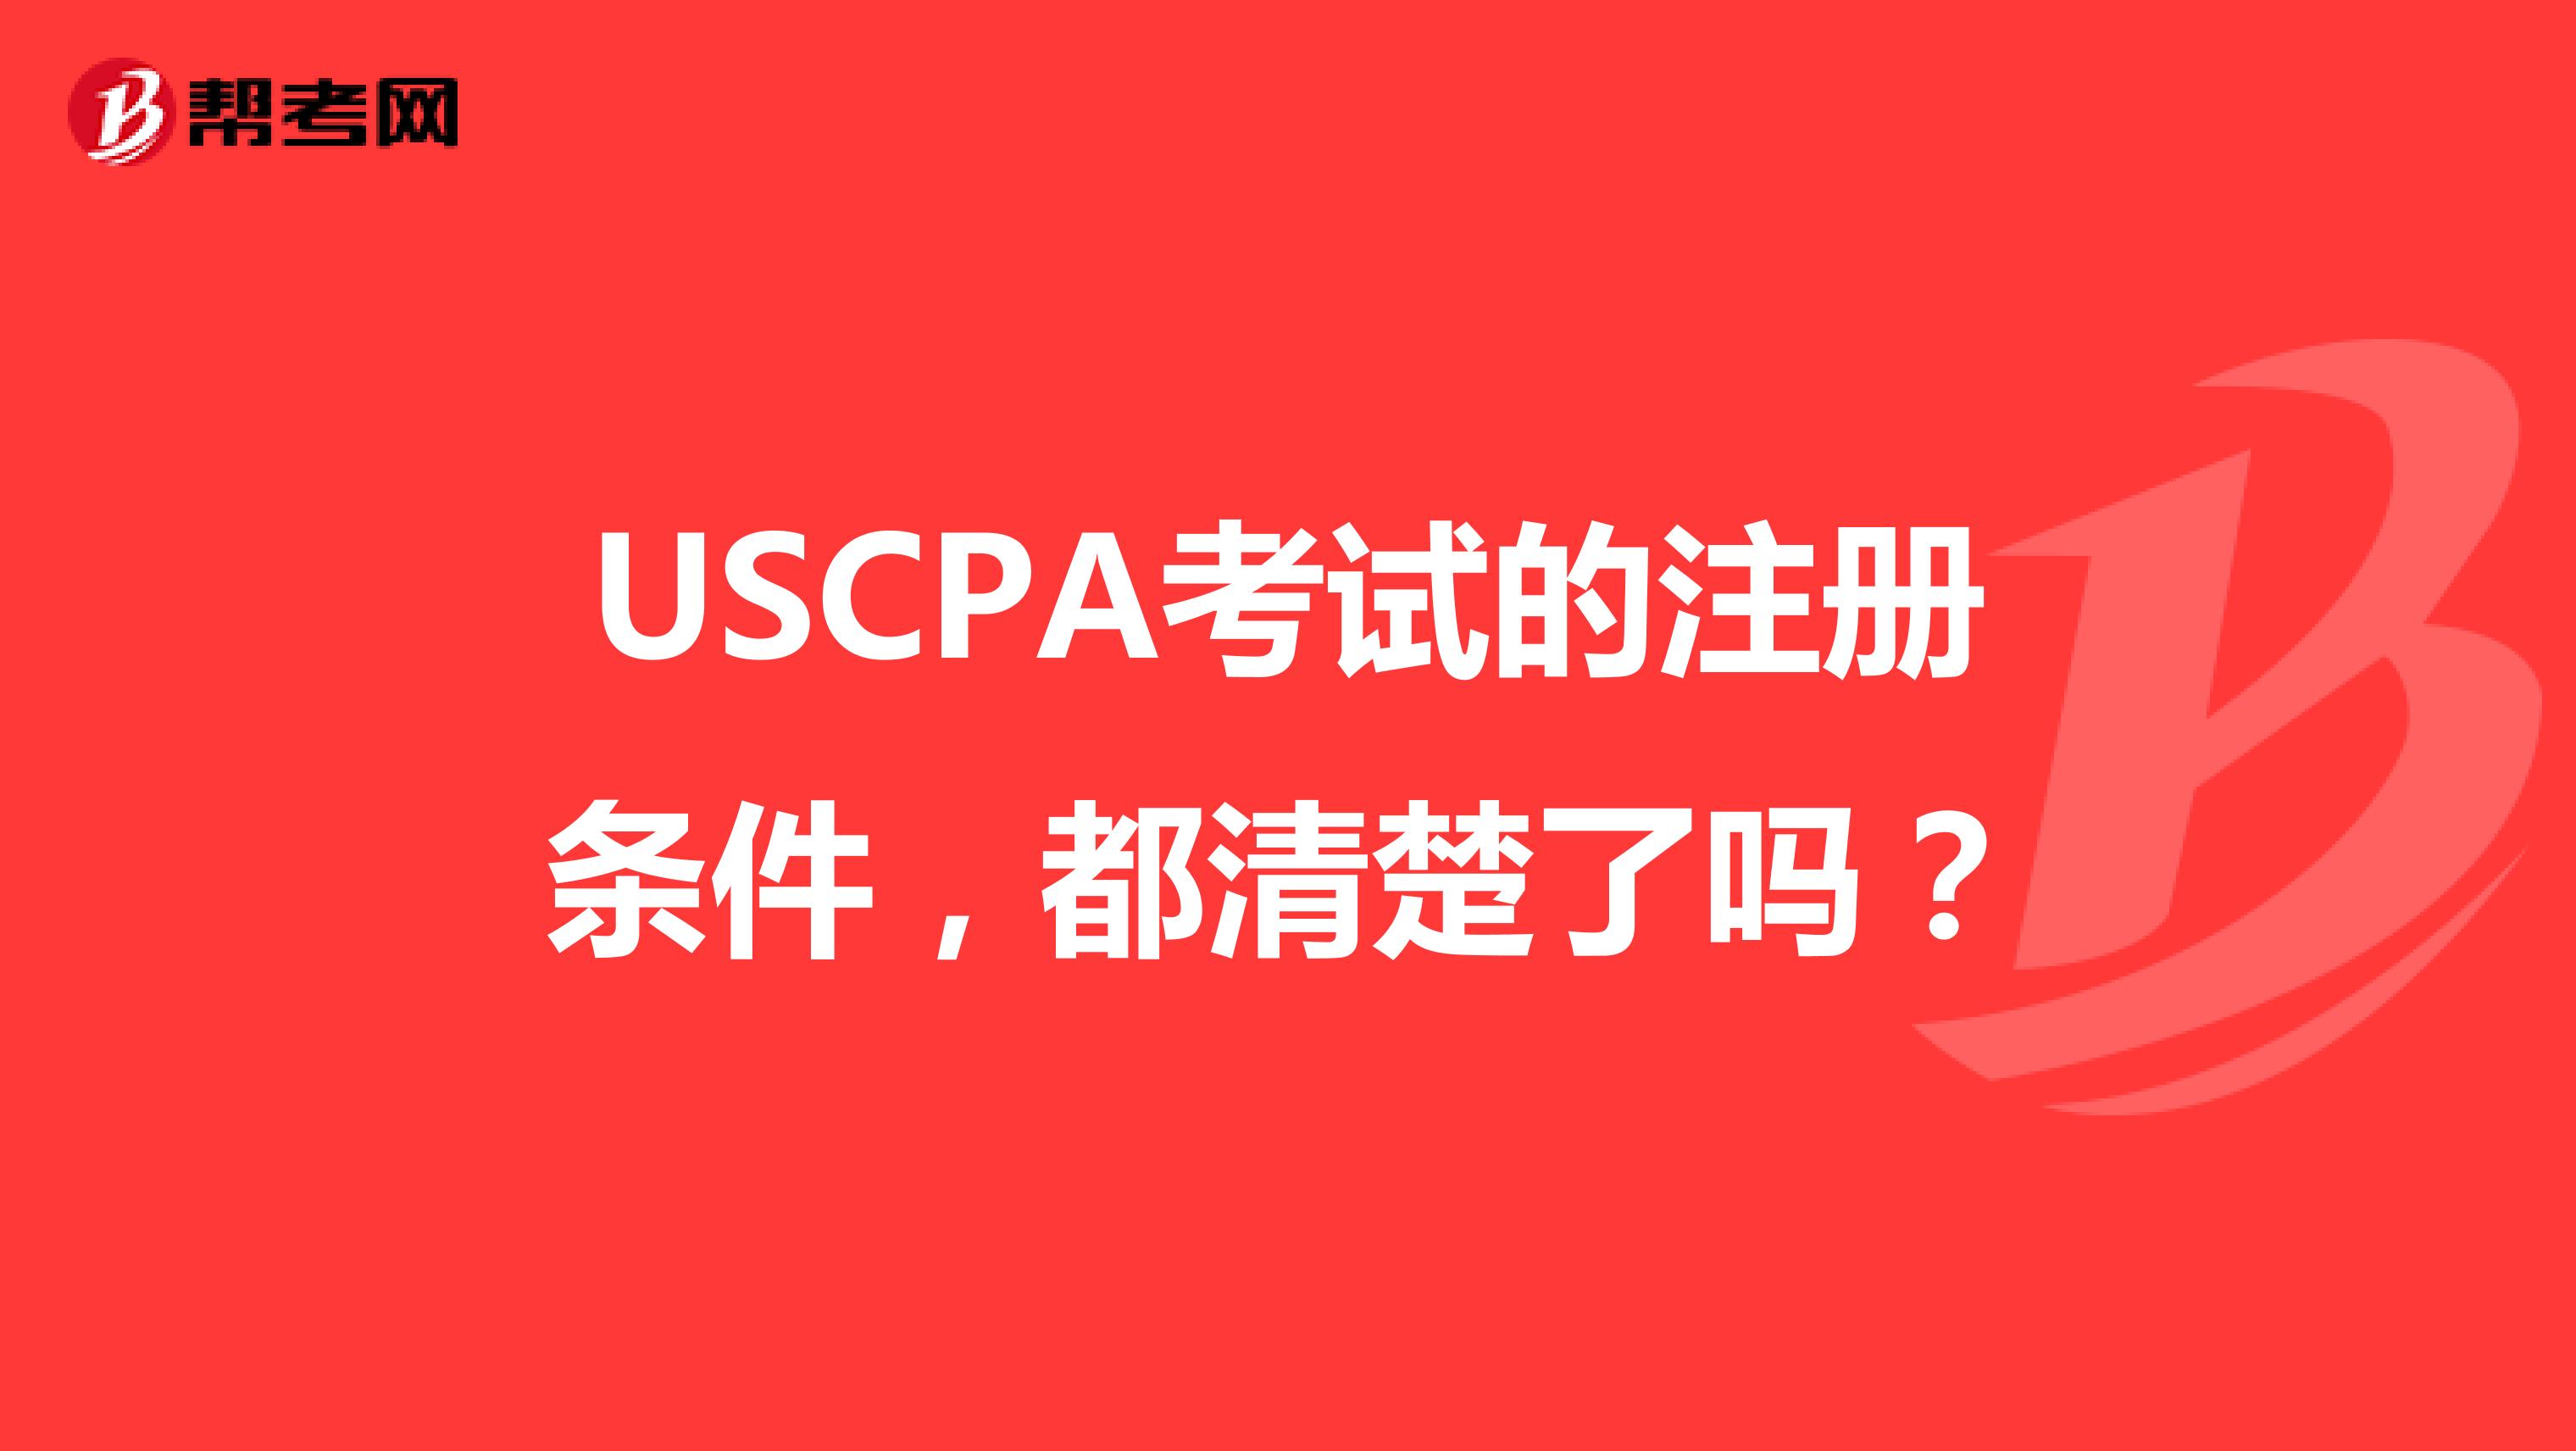 USCPA考试的注册条件，都清楚了吗？